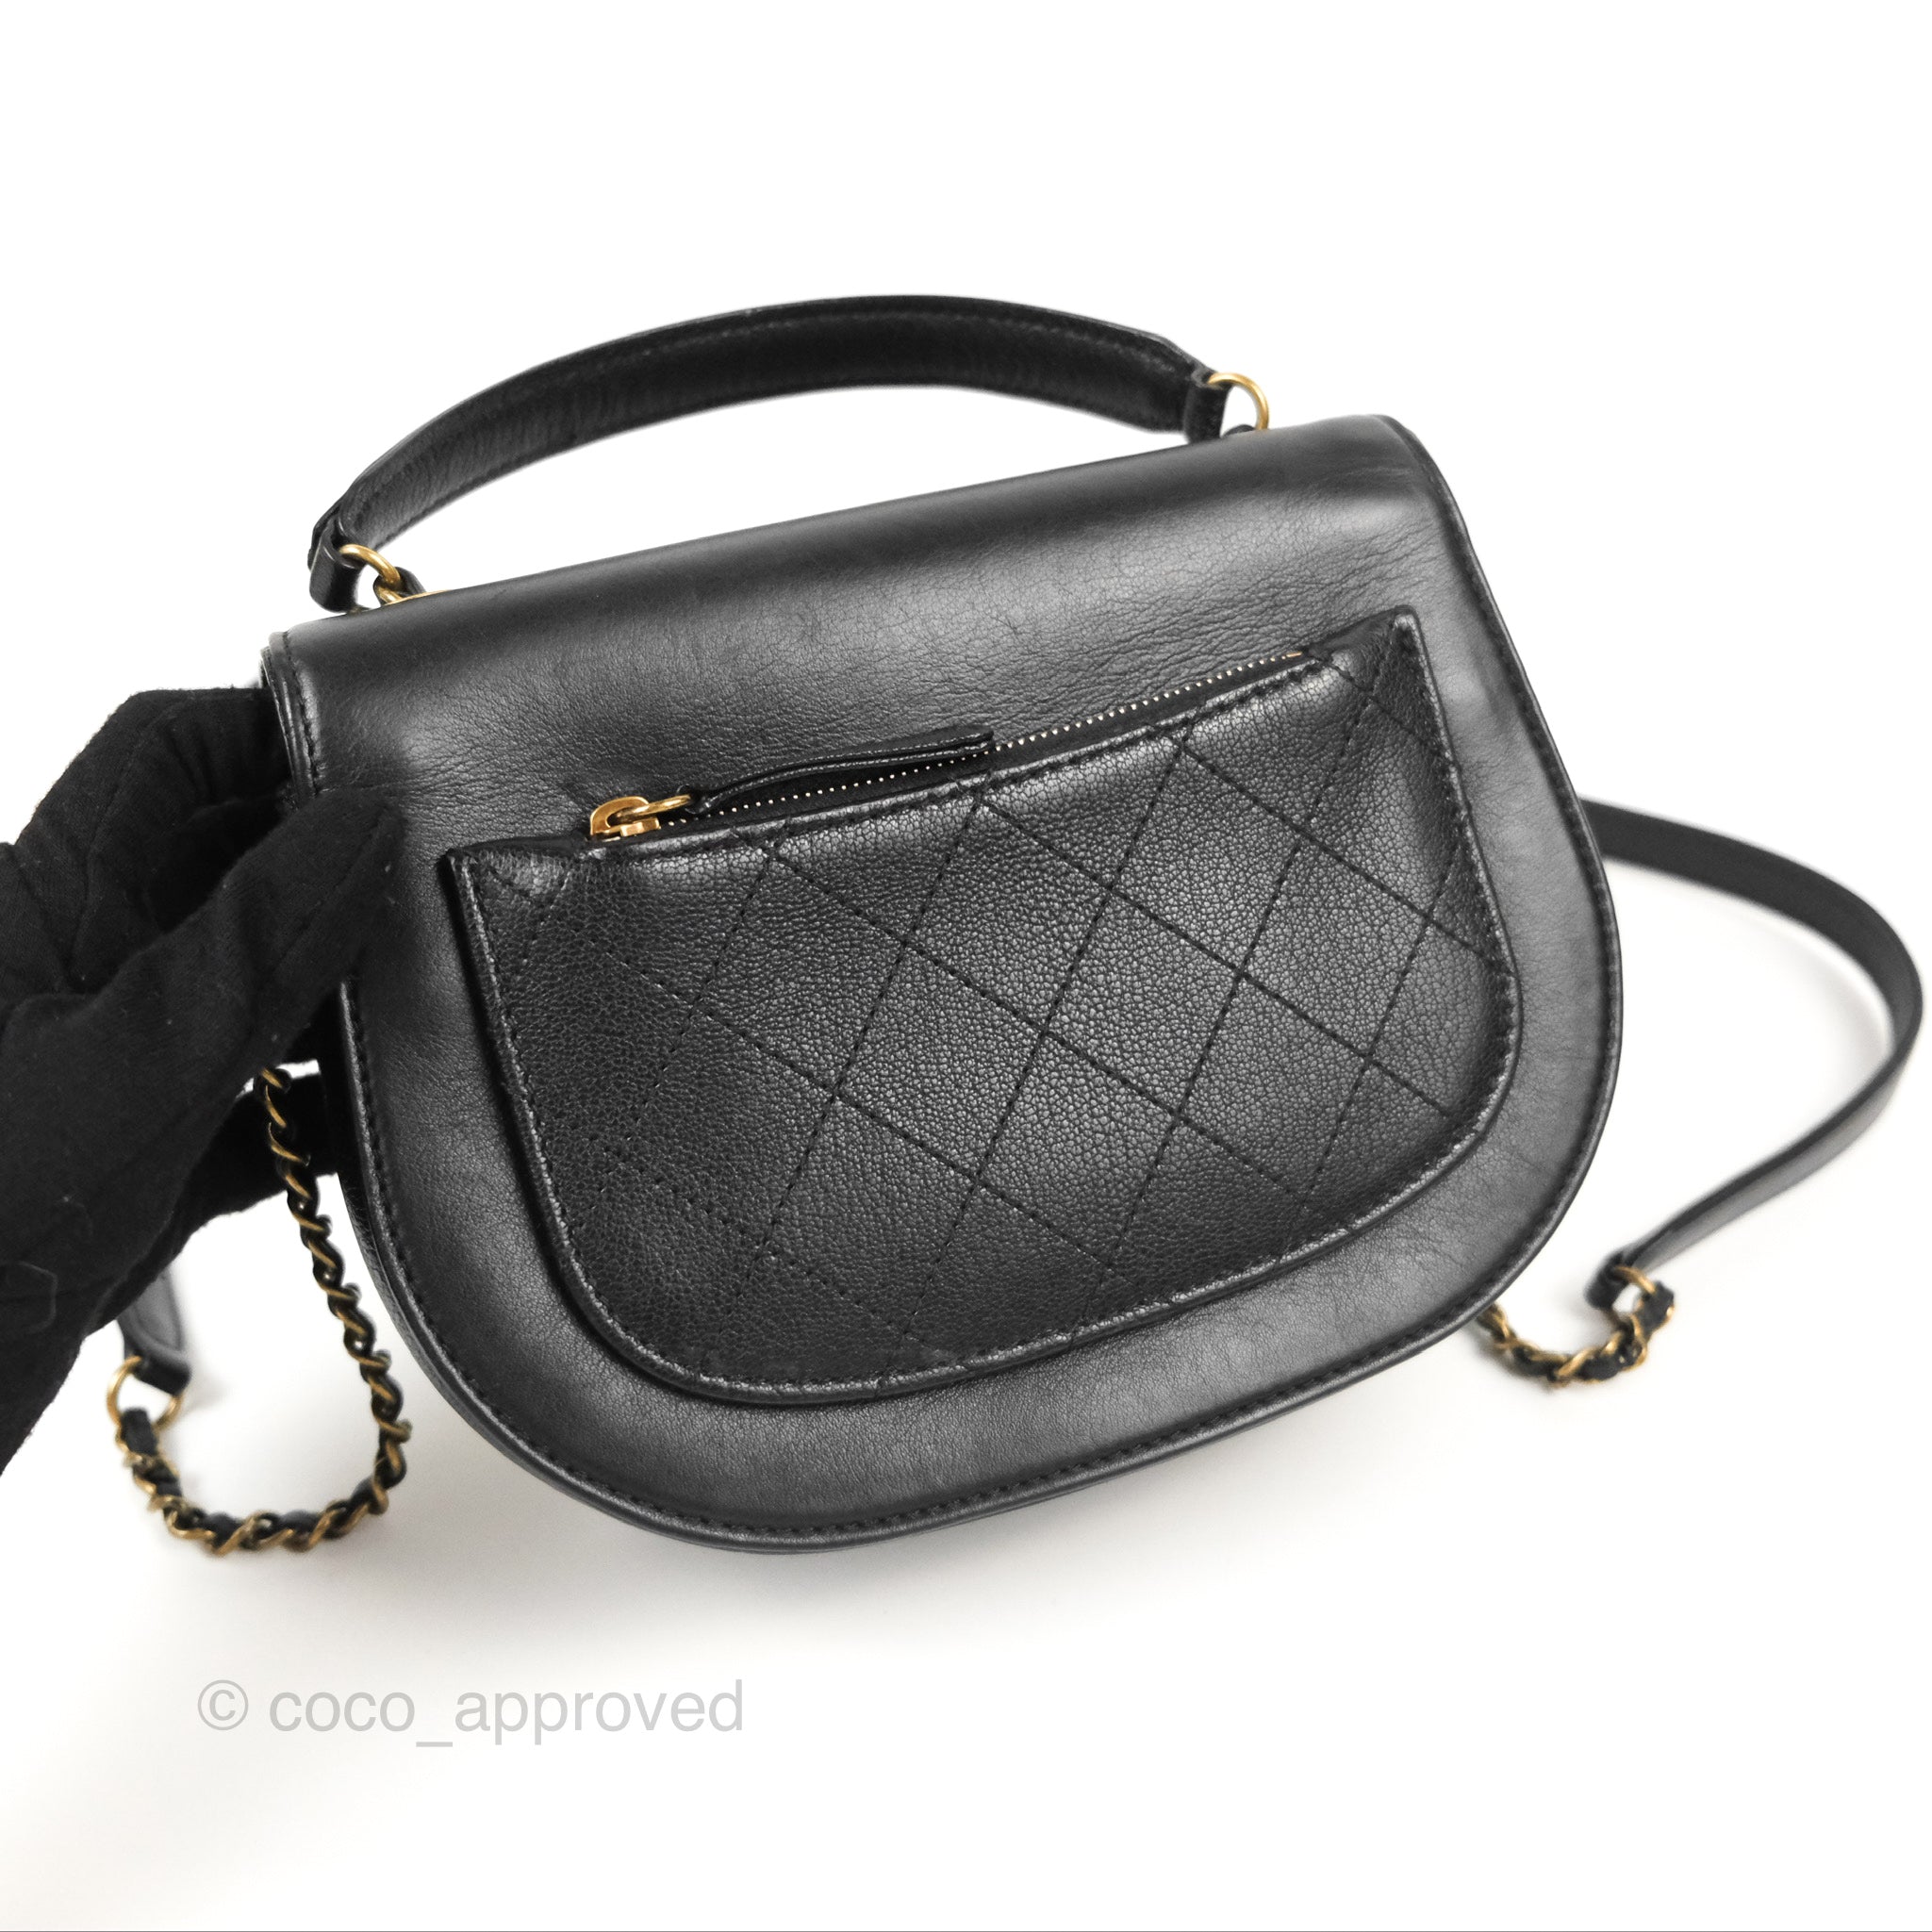 CHANEL Vanity Leather Crossbody Bag Black- sold